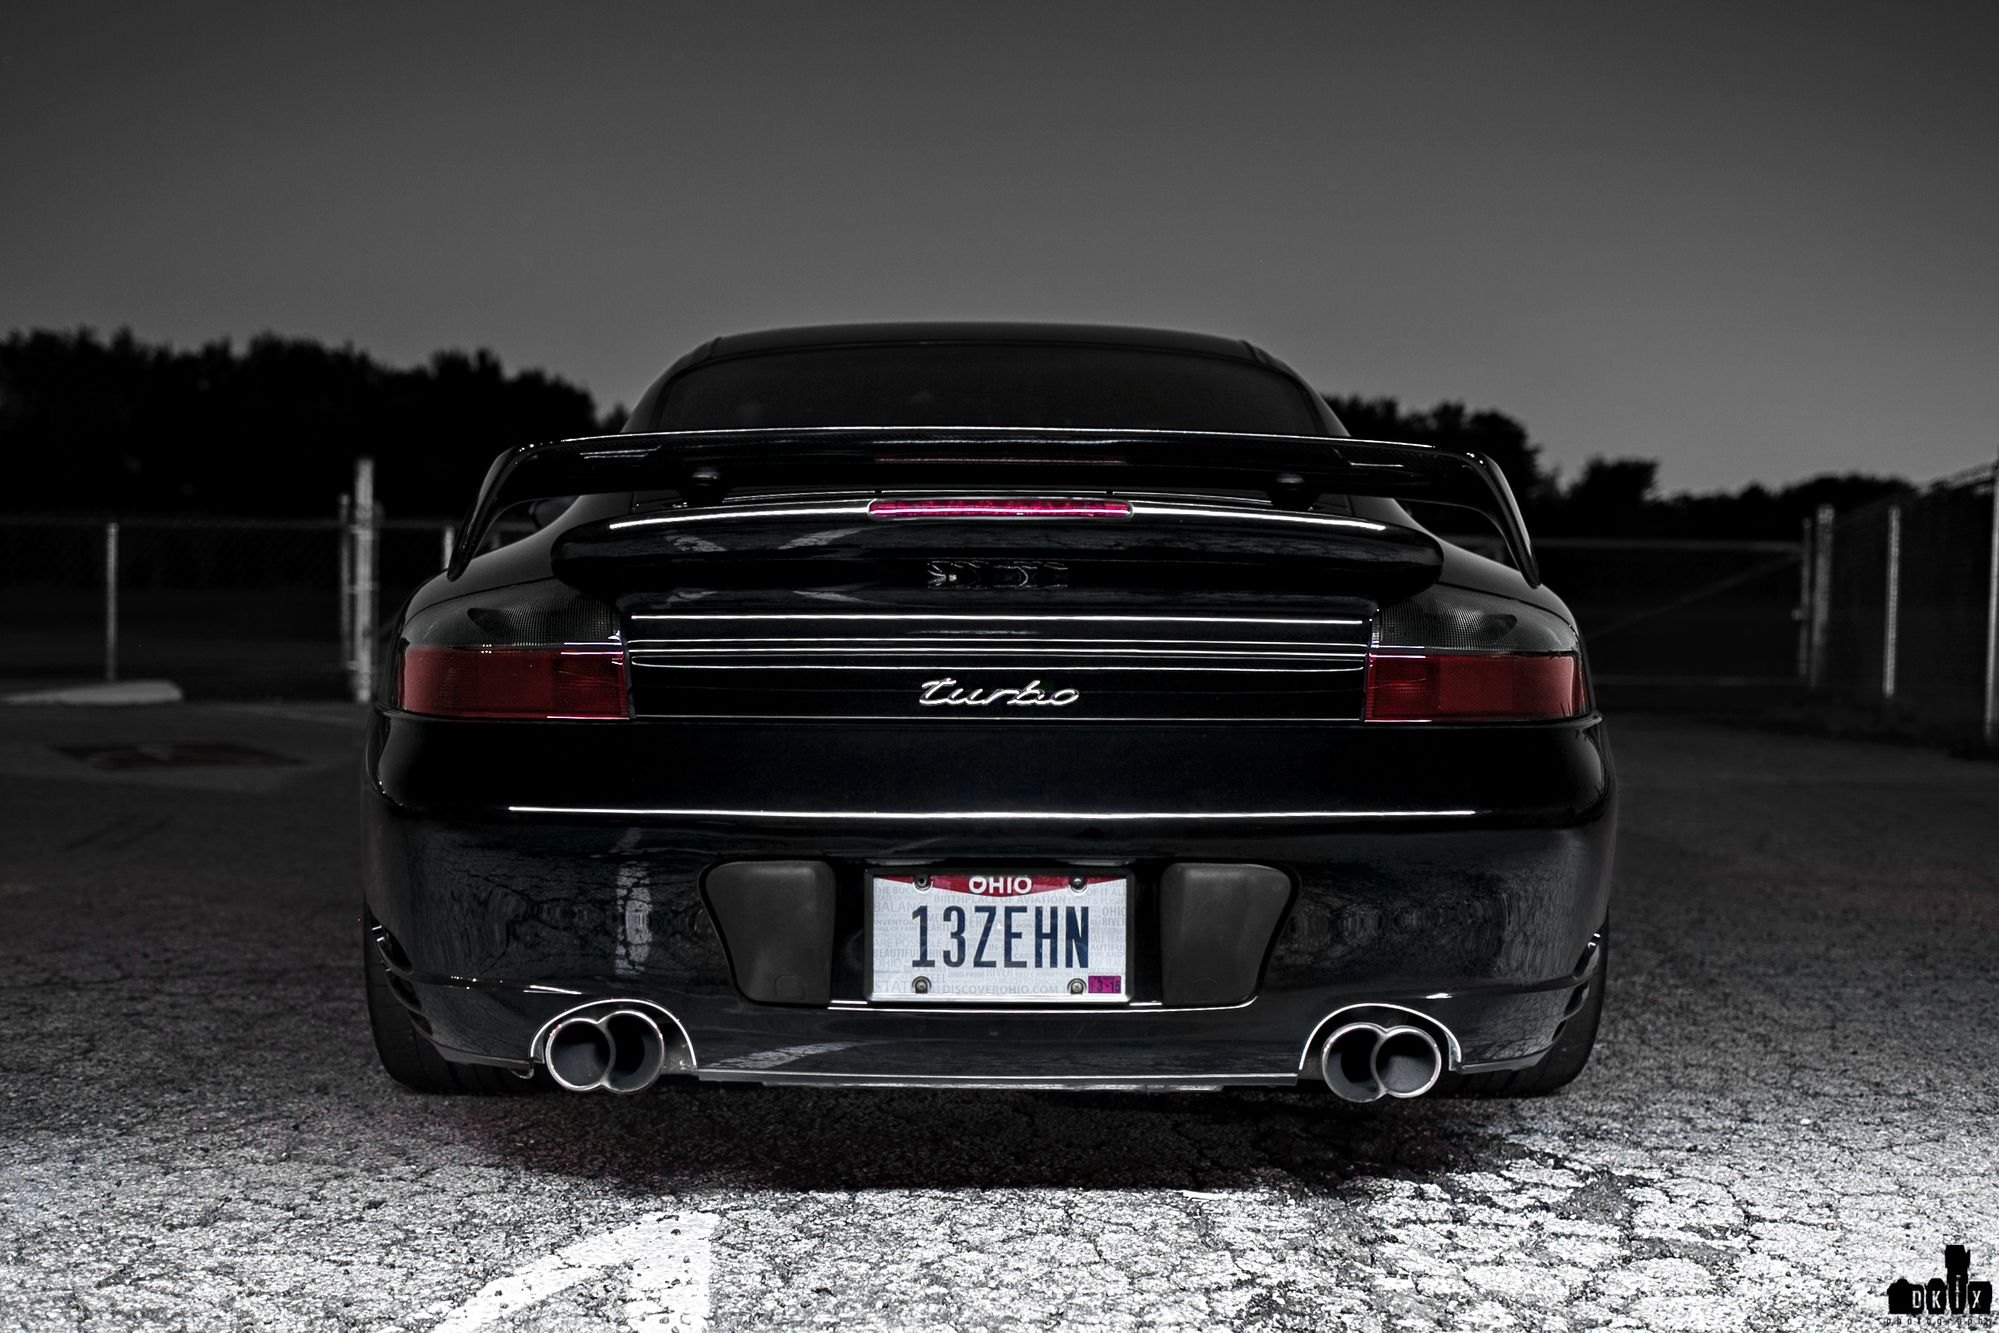 Aftermarket Rear Diffuser on Black Porsche 911 - Photo by dan kinzie